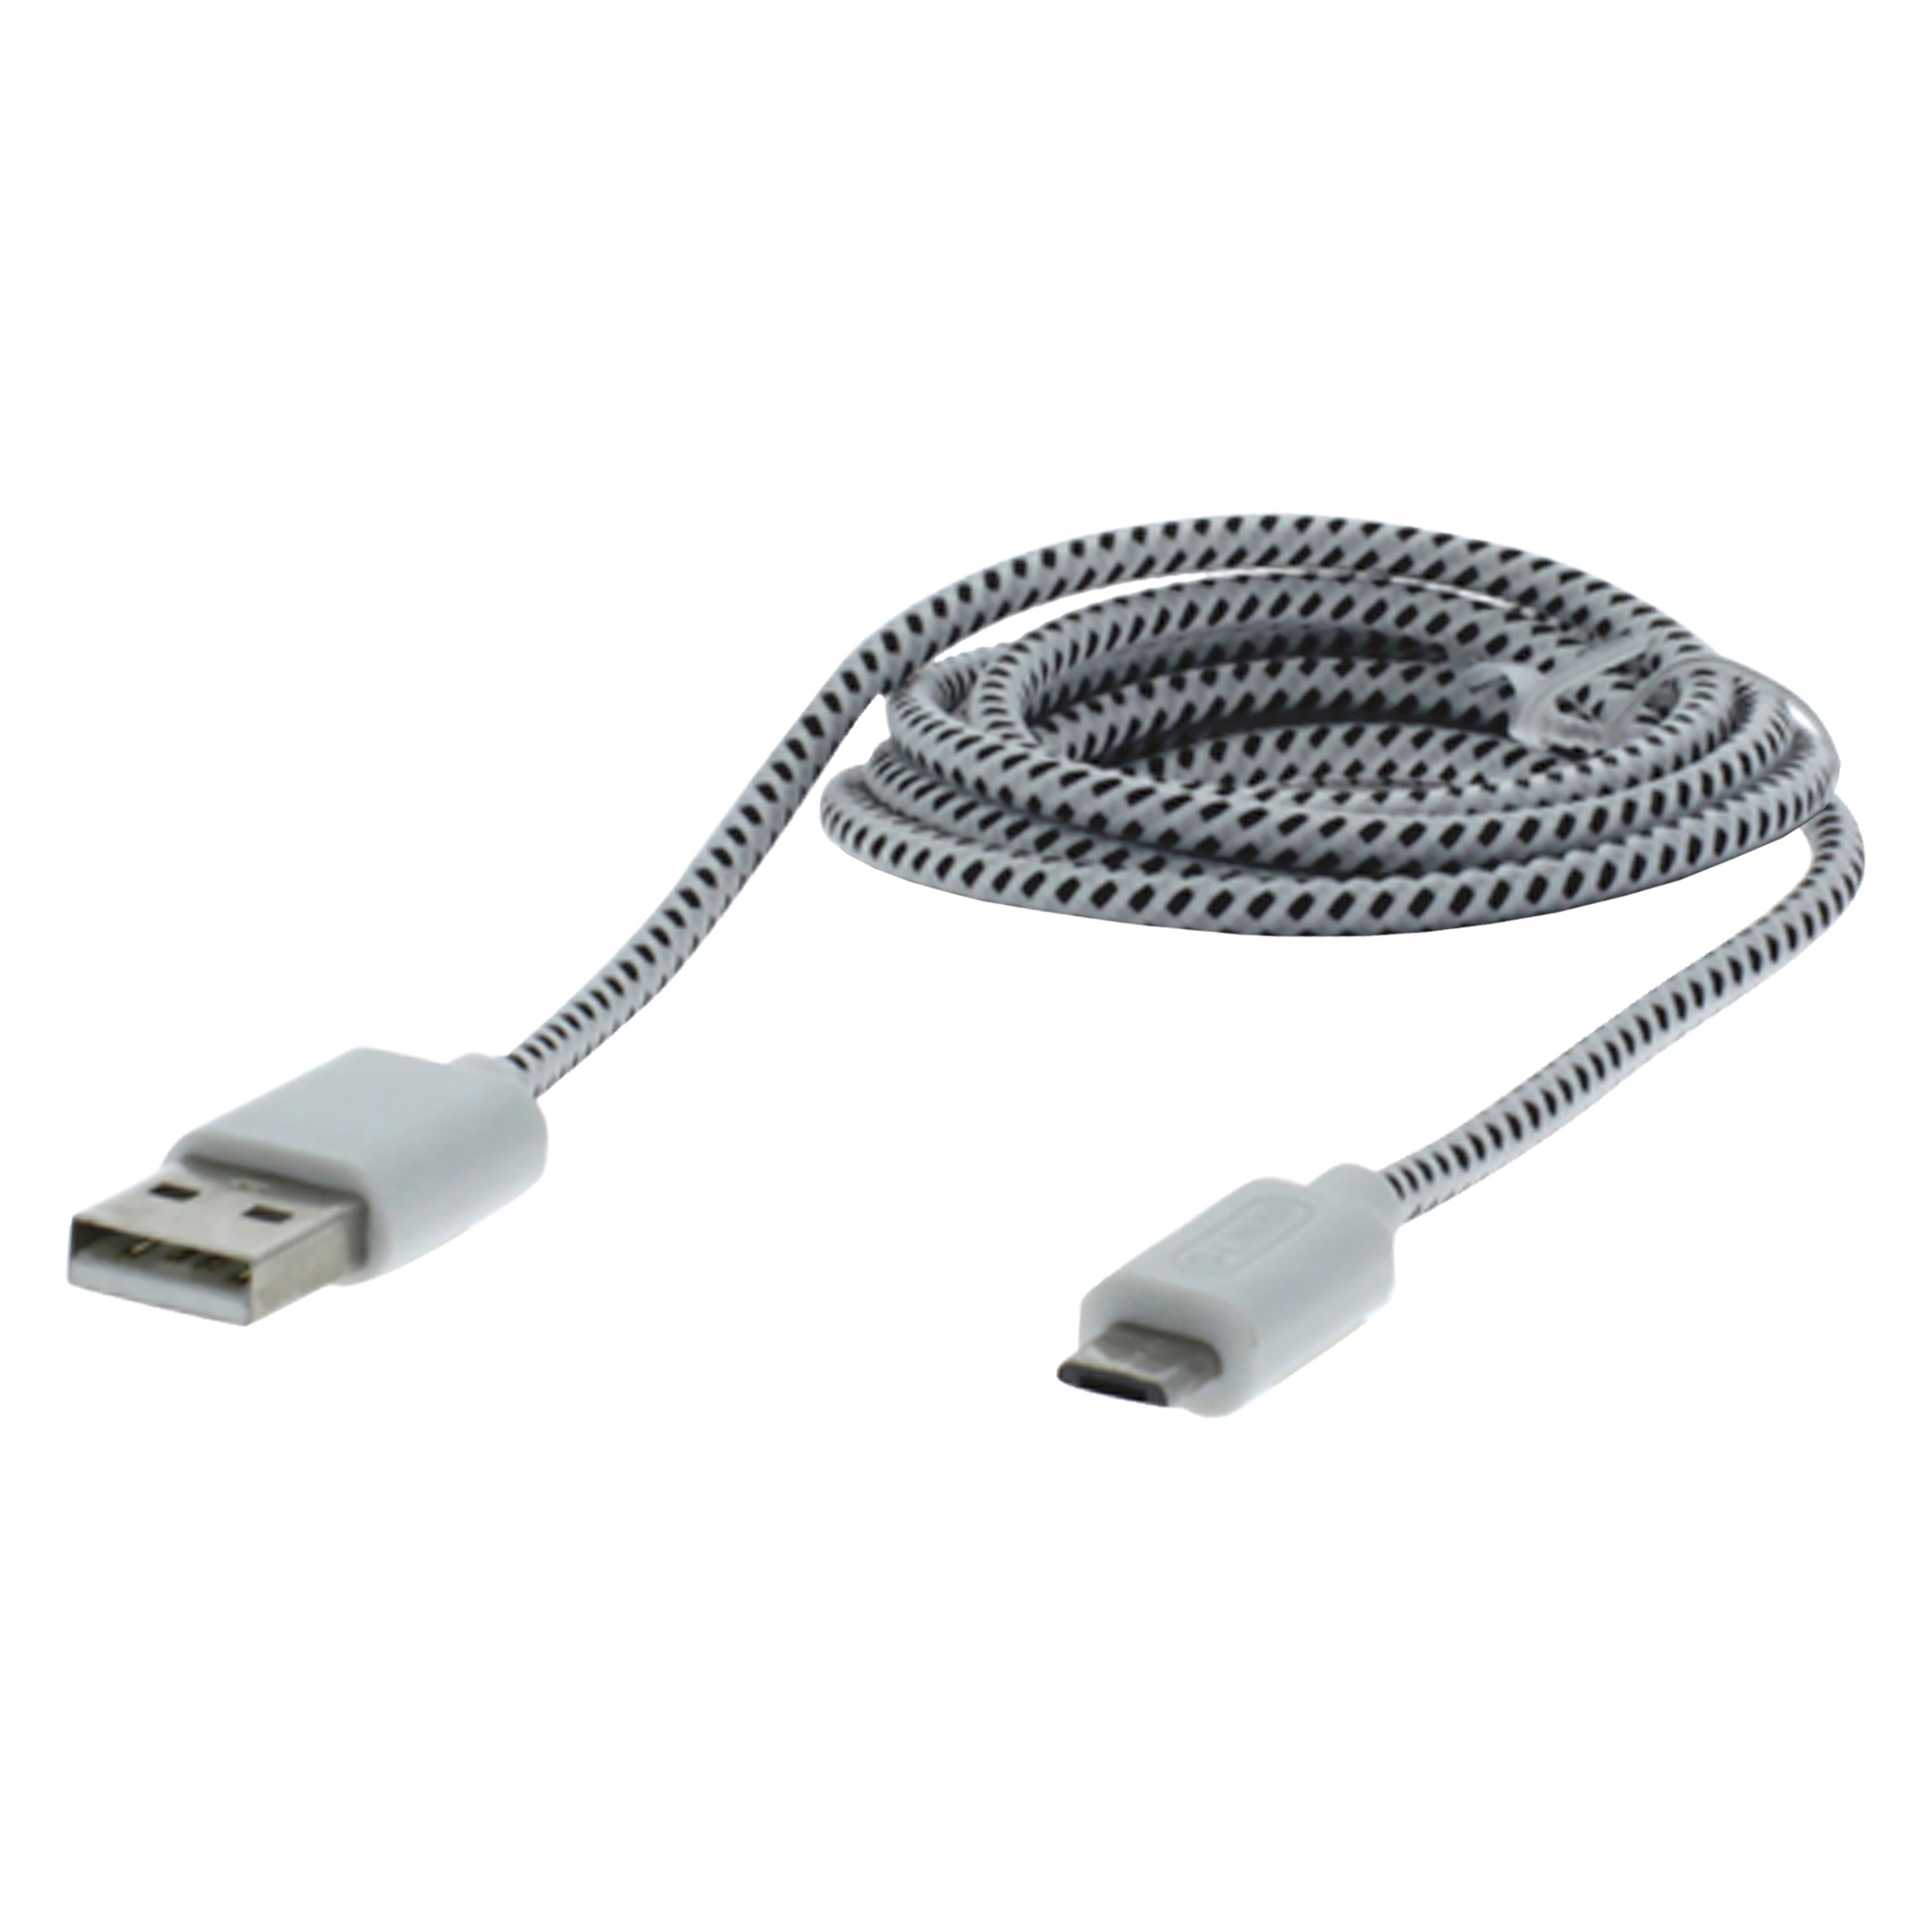 00.137.00 Q-Link  datakabel USB - Micro USB - 1 m - zwart/wit